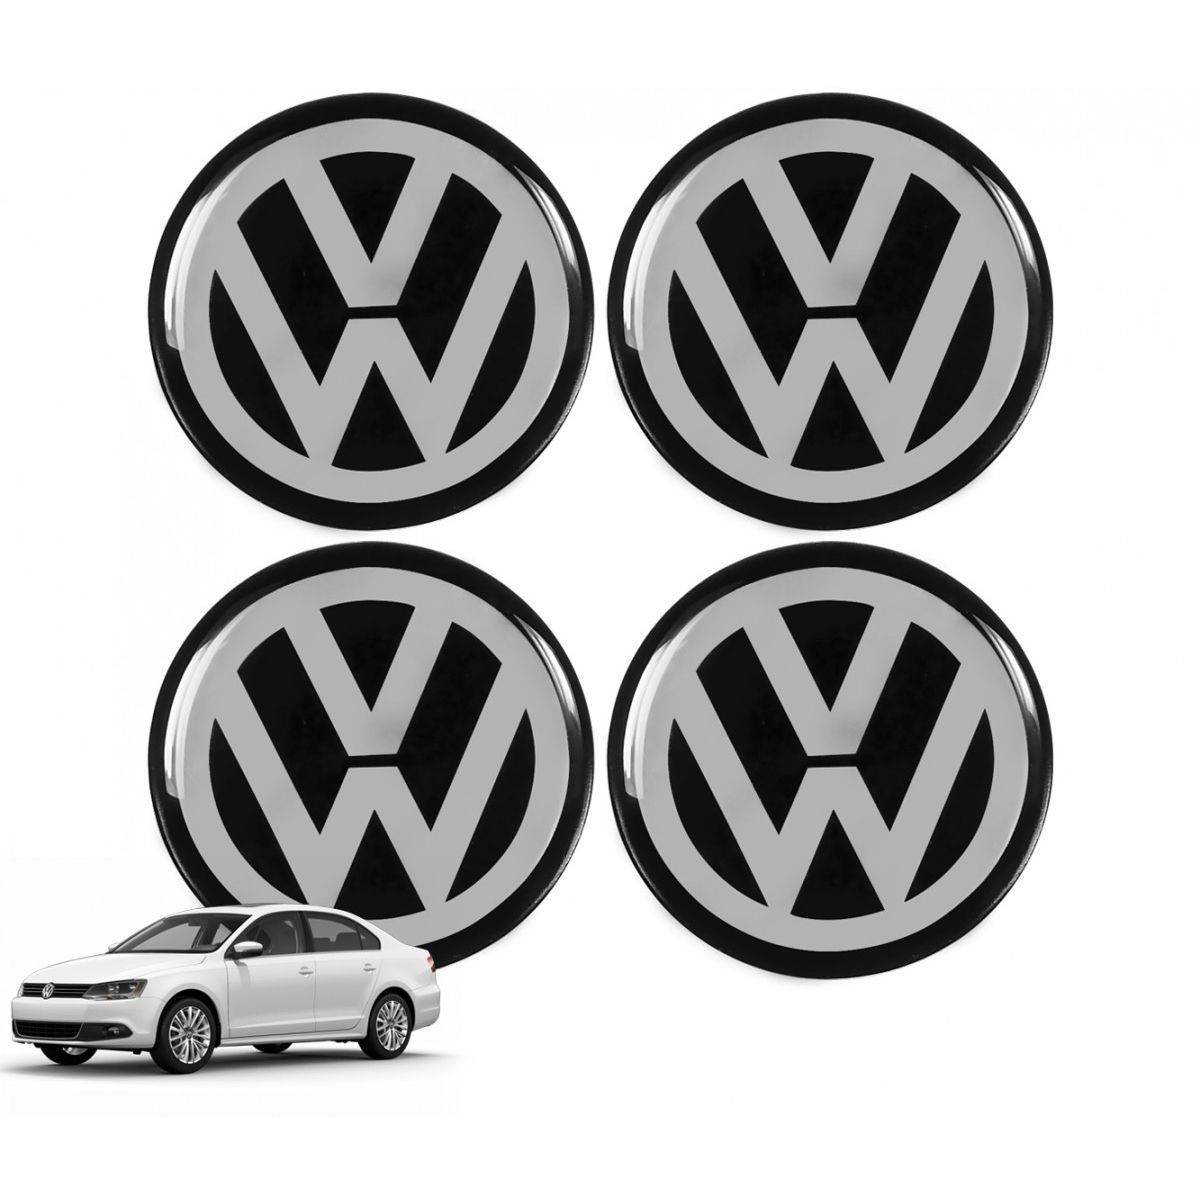 Emblema Adesivo Roda Esport Calota Resinado 48mm Volkswagen